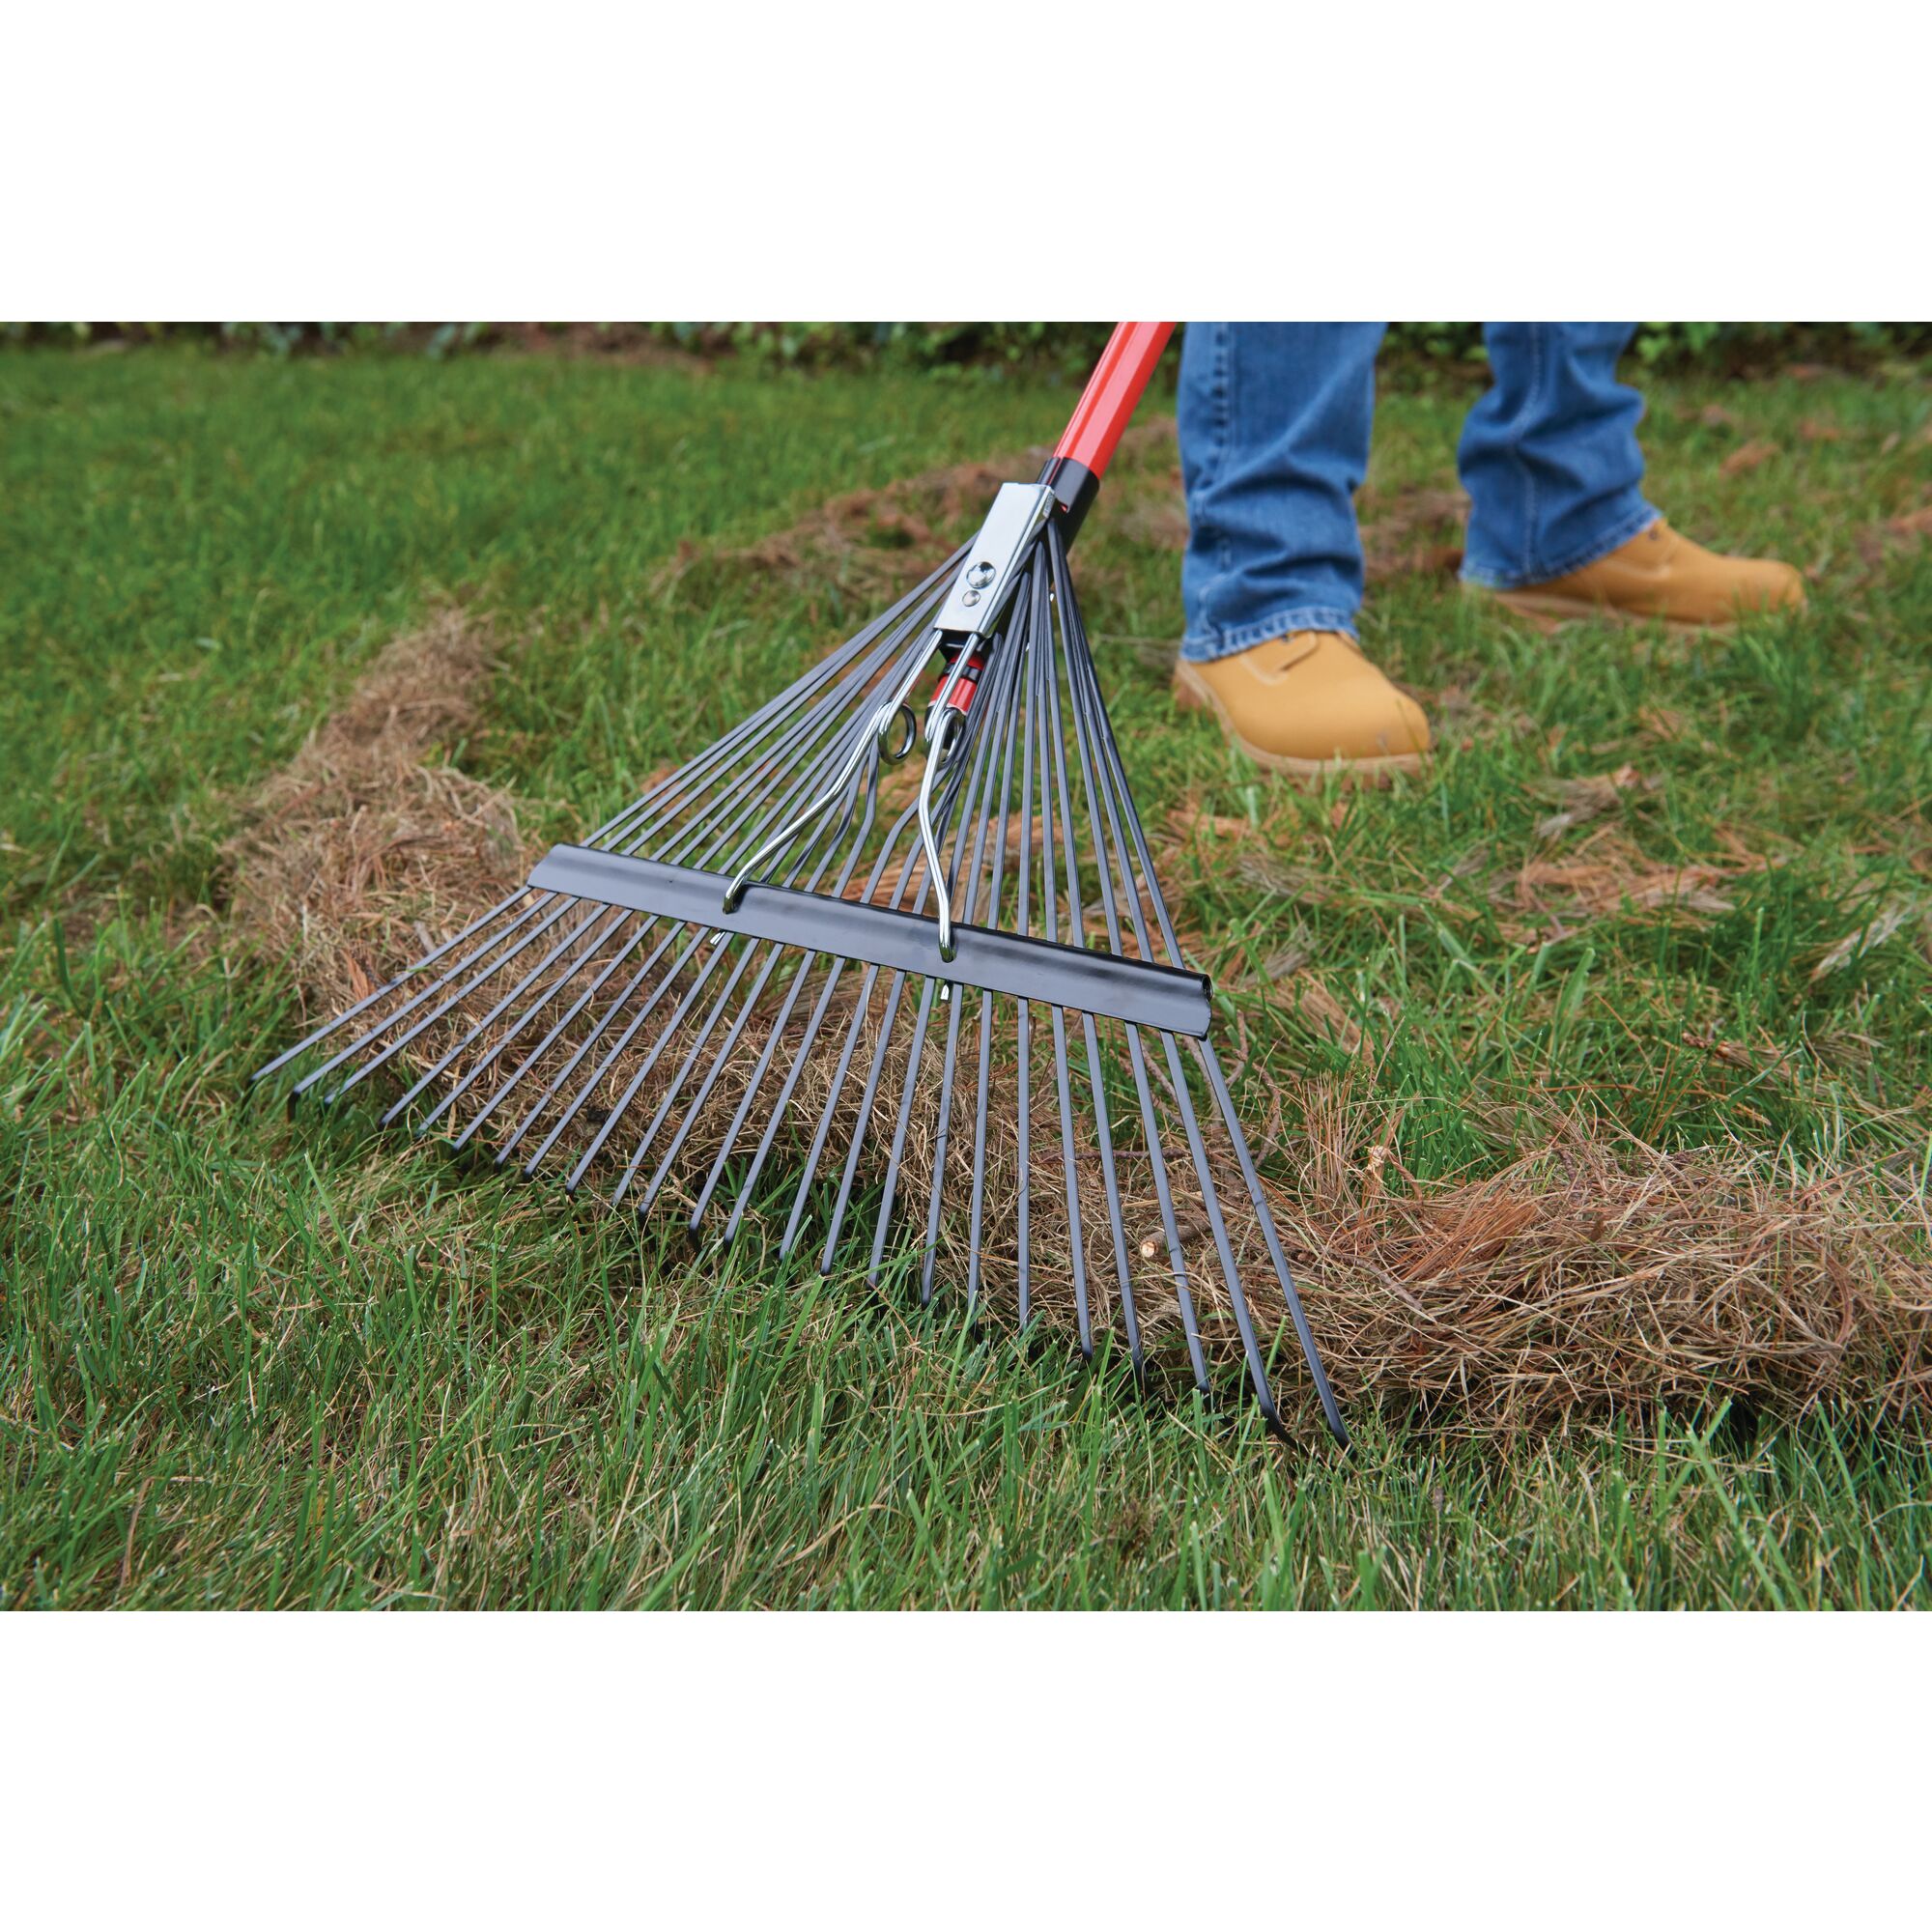 24 inch tine fiberglass handle lawn rake being used.